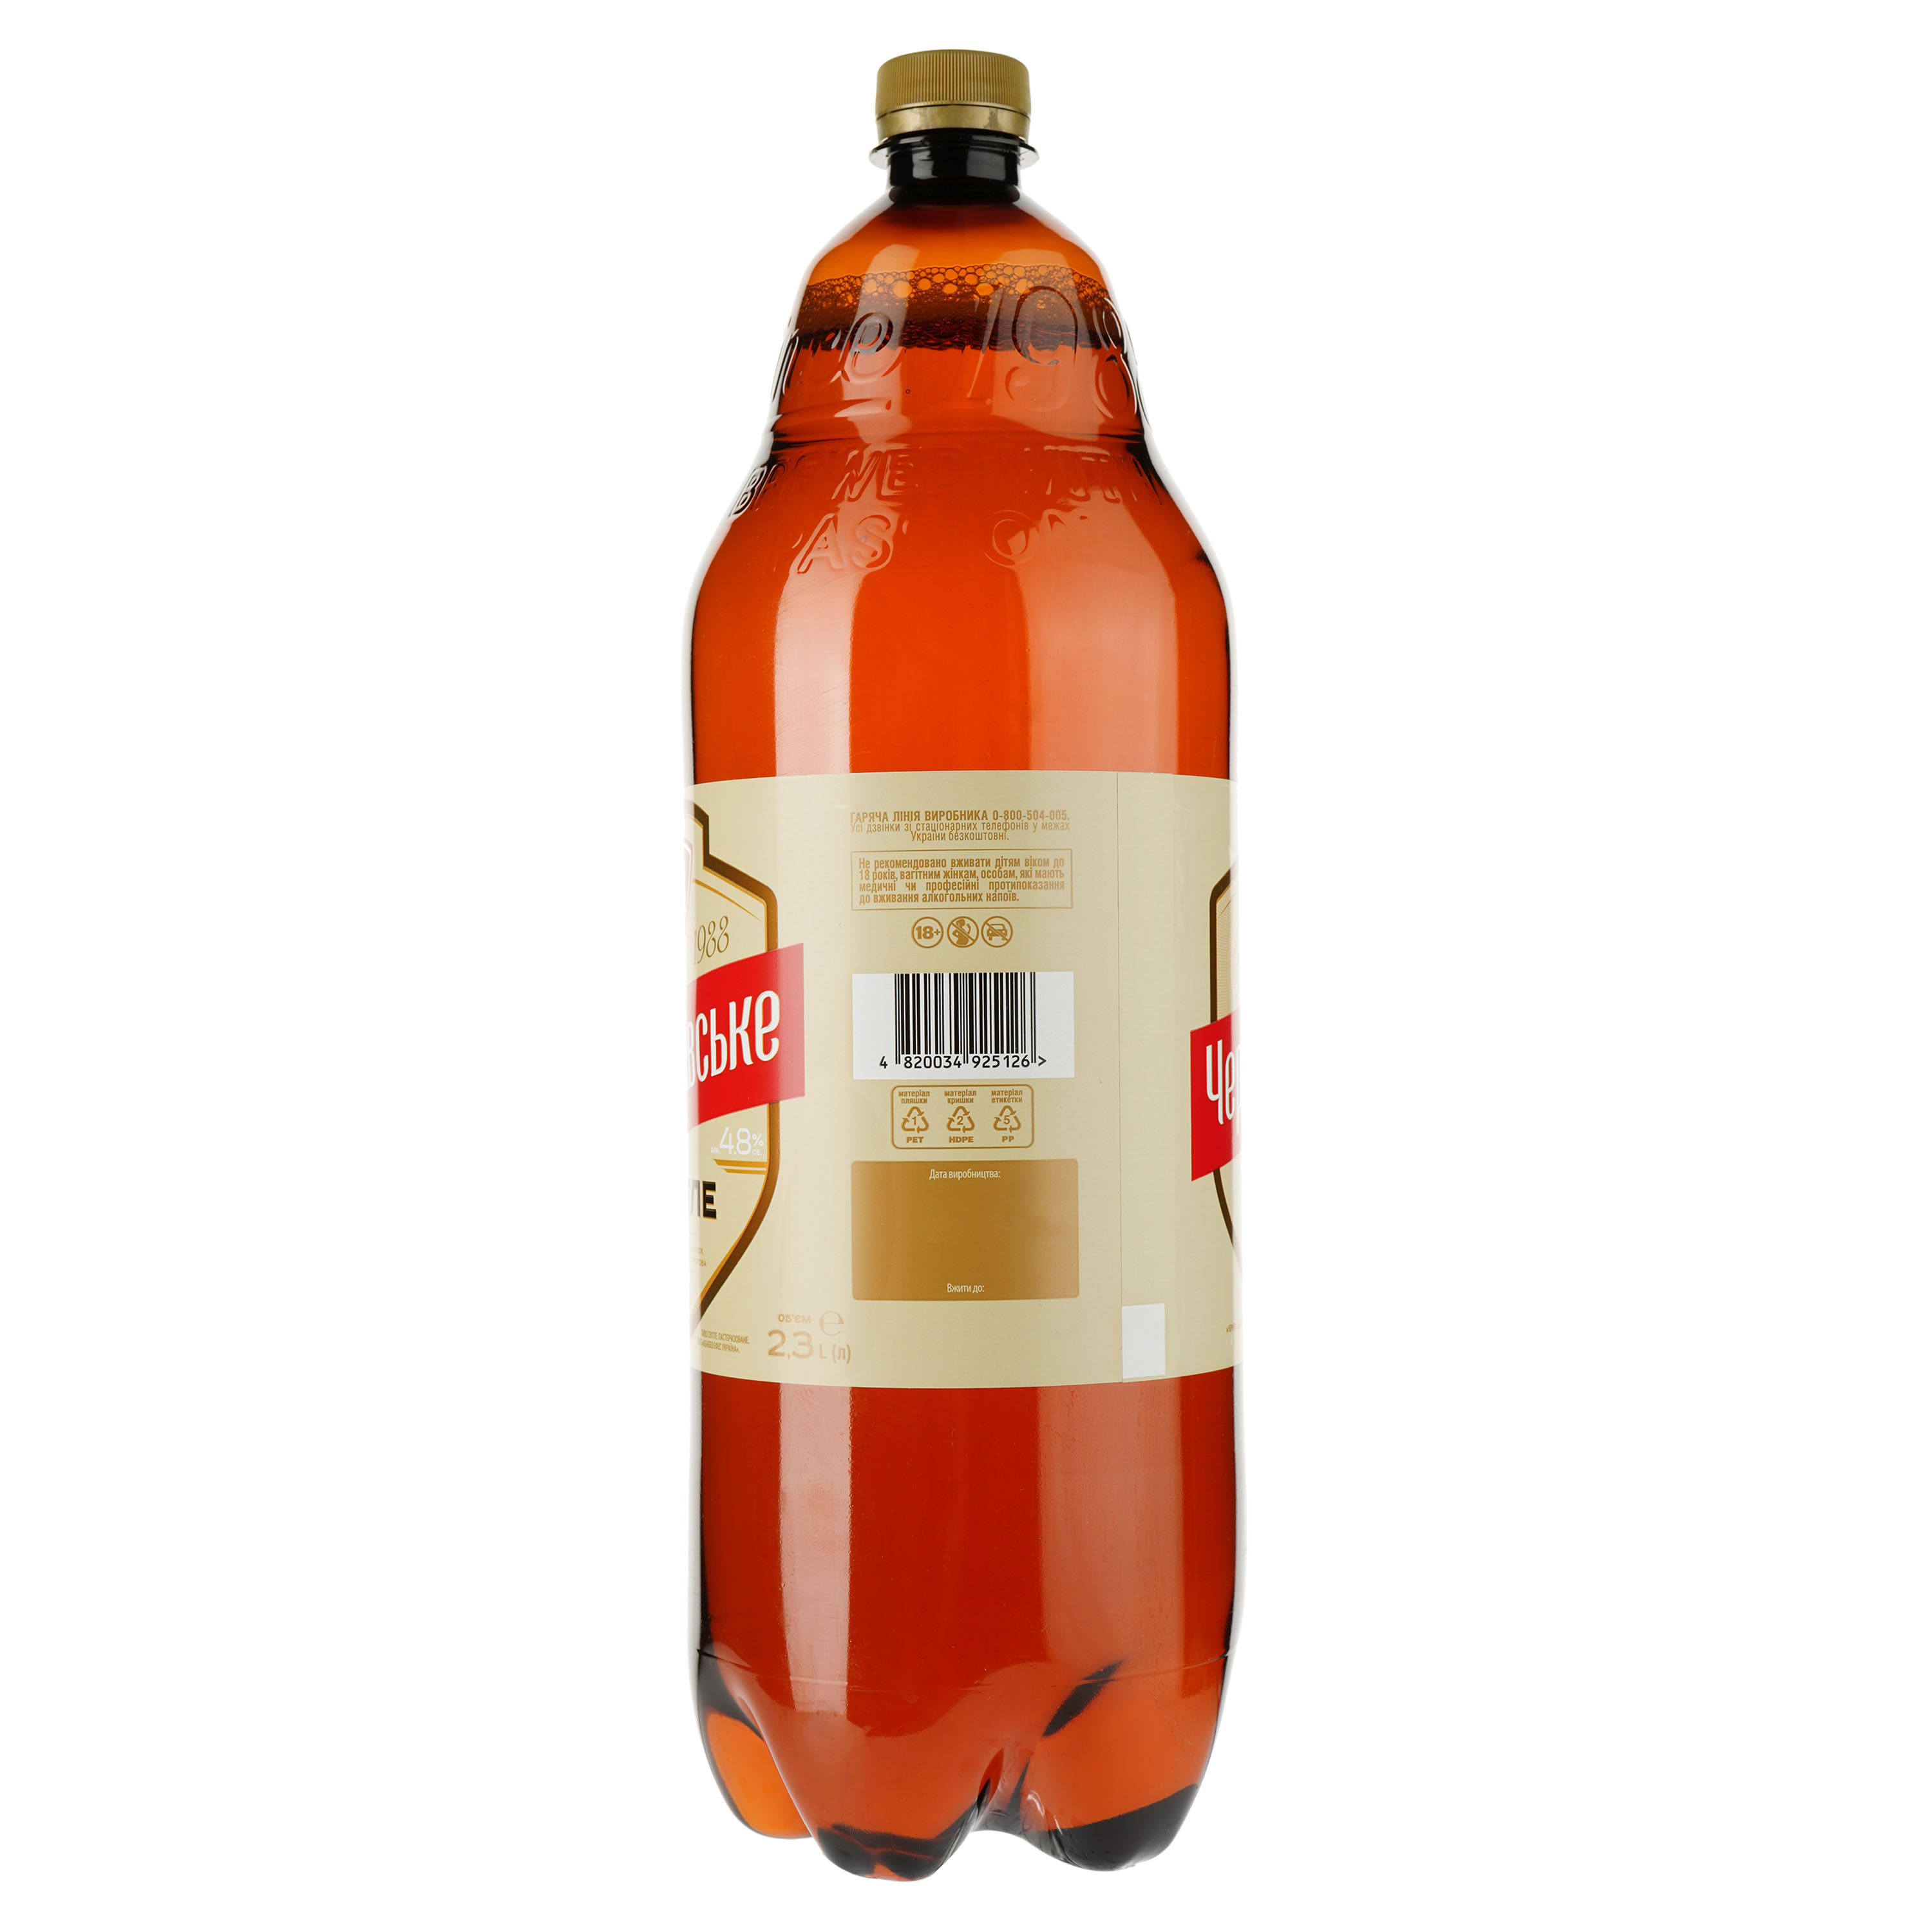 Пиво Чернігівське, светлое, 4,5%, 2,3 л (868305) - фото 2